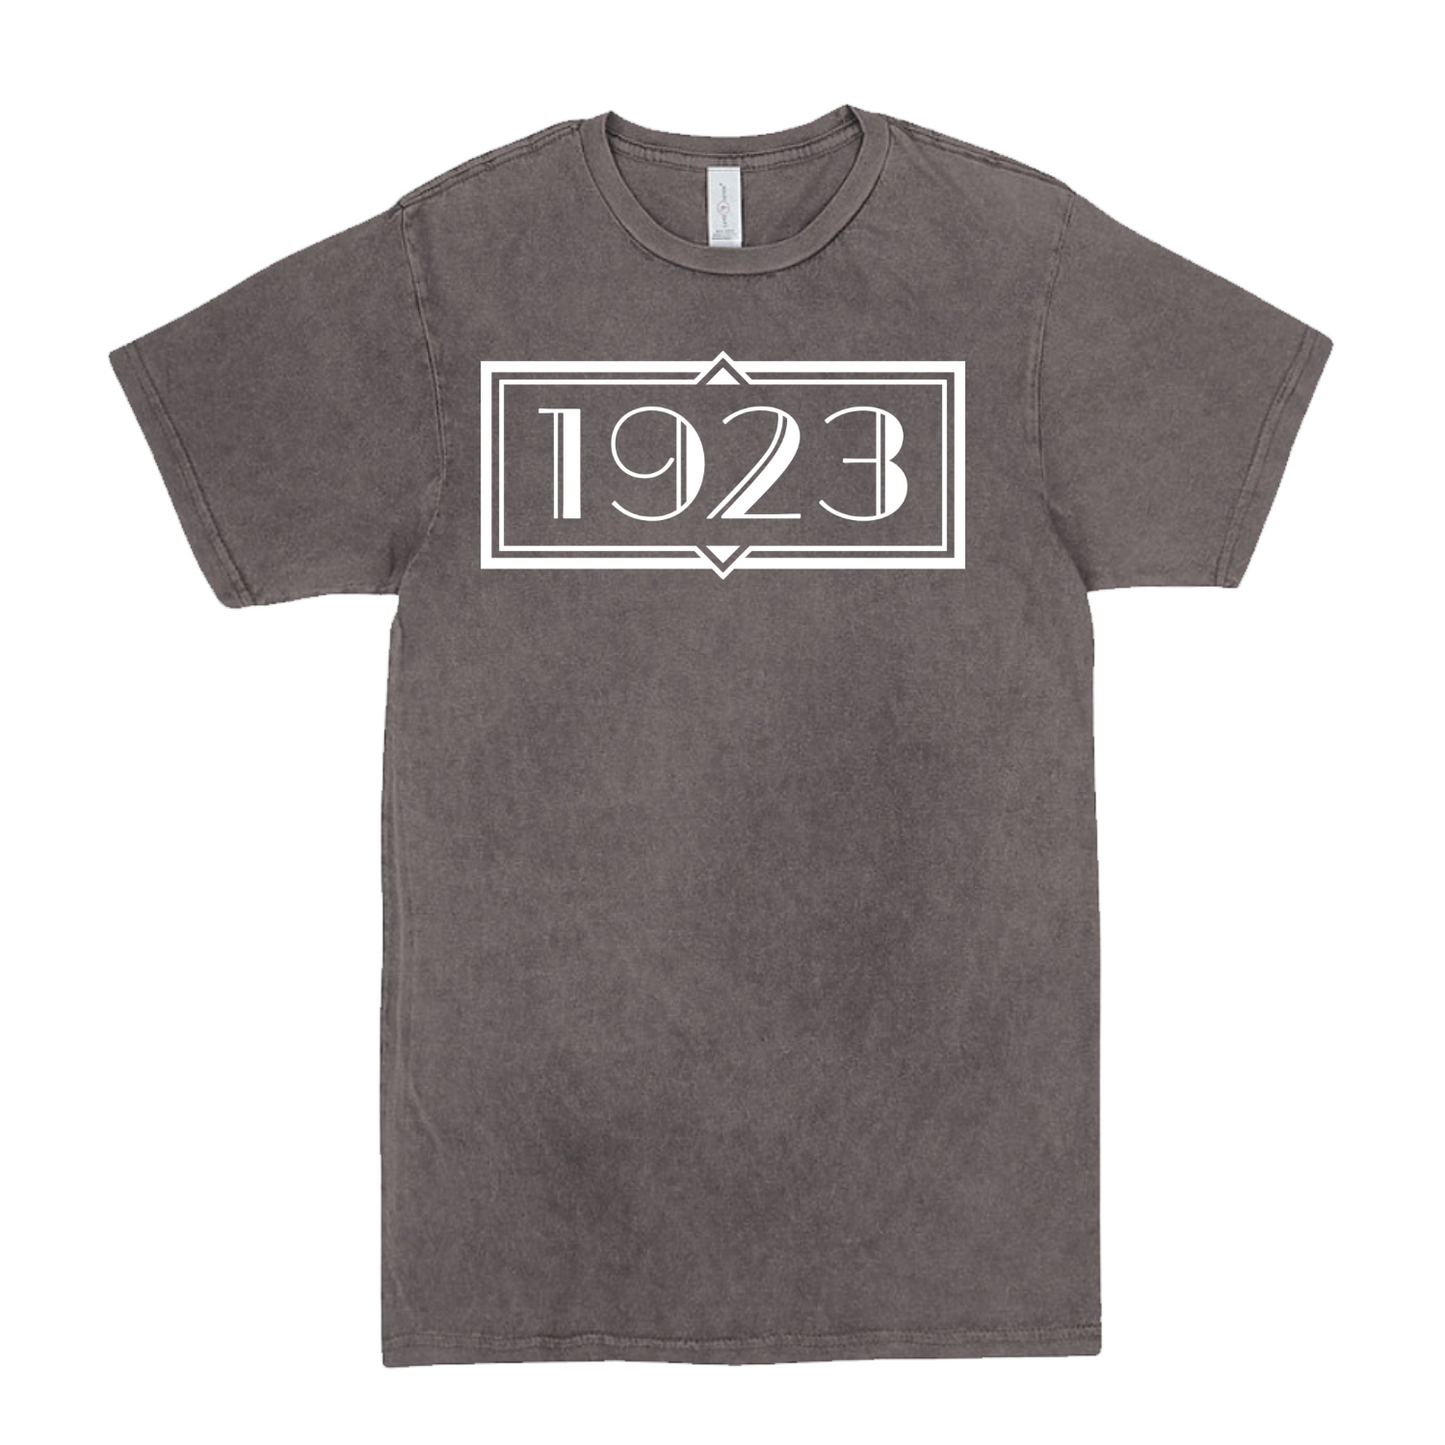 Yellowstone 1923 Logo Distressed T-Shirt